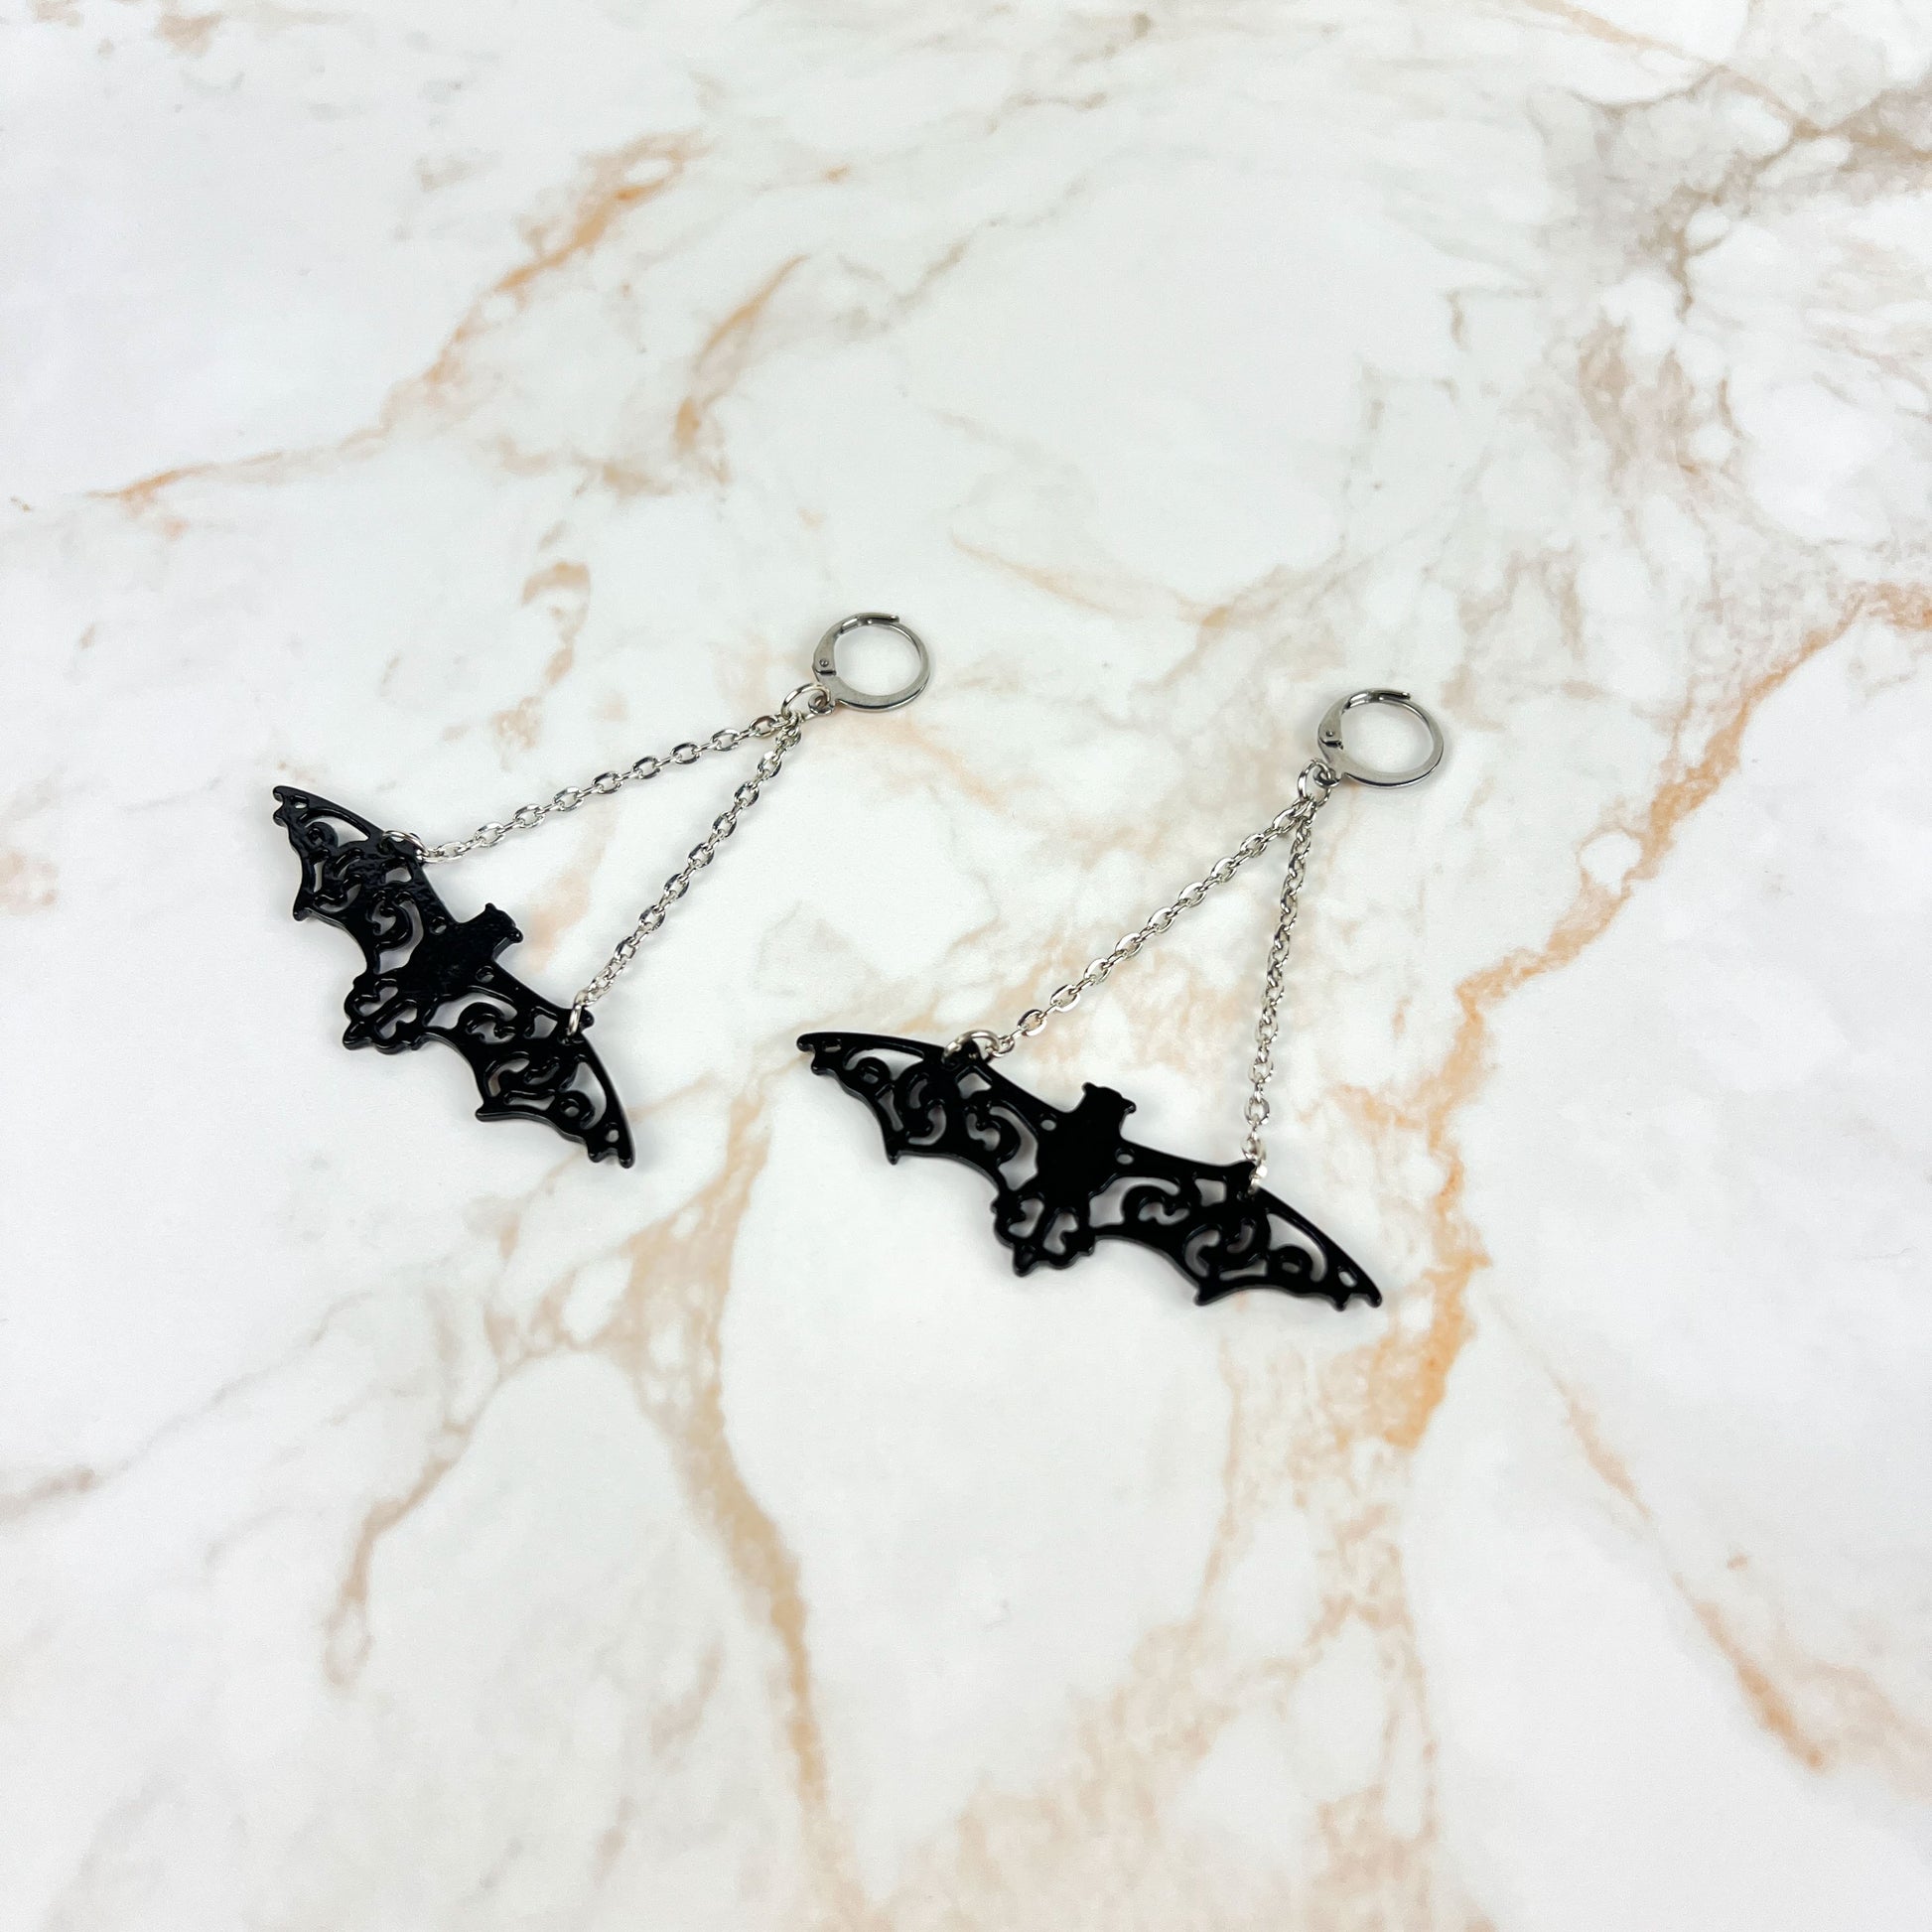 Bat earrings big gothic earrings occult earrings Halloween jewelry romantic goth